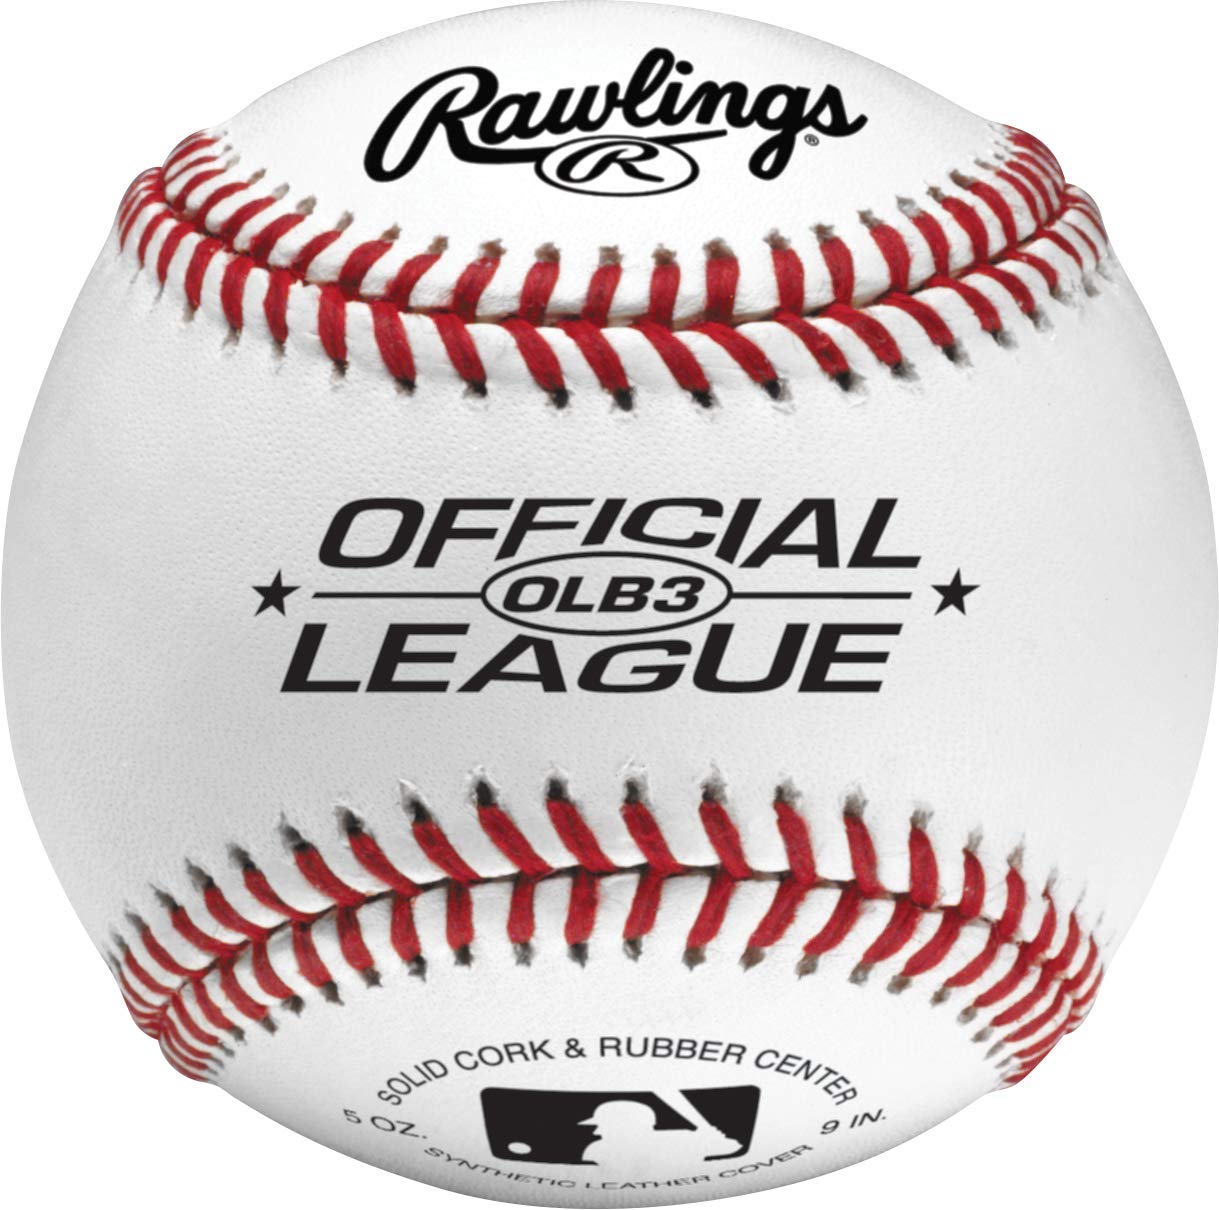 Official League Recreational Use Practice Baseballs